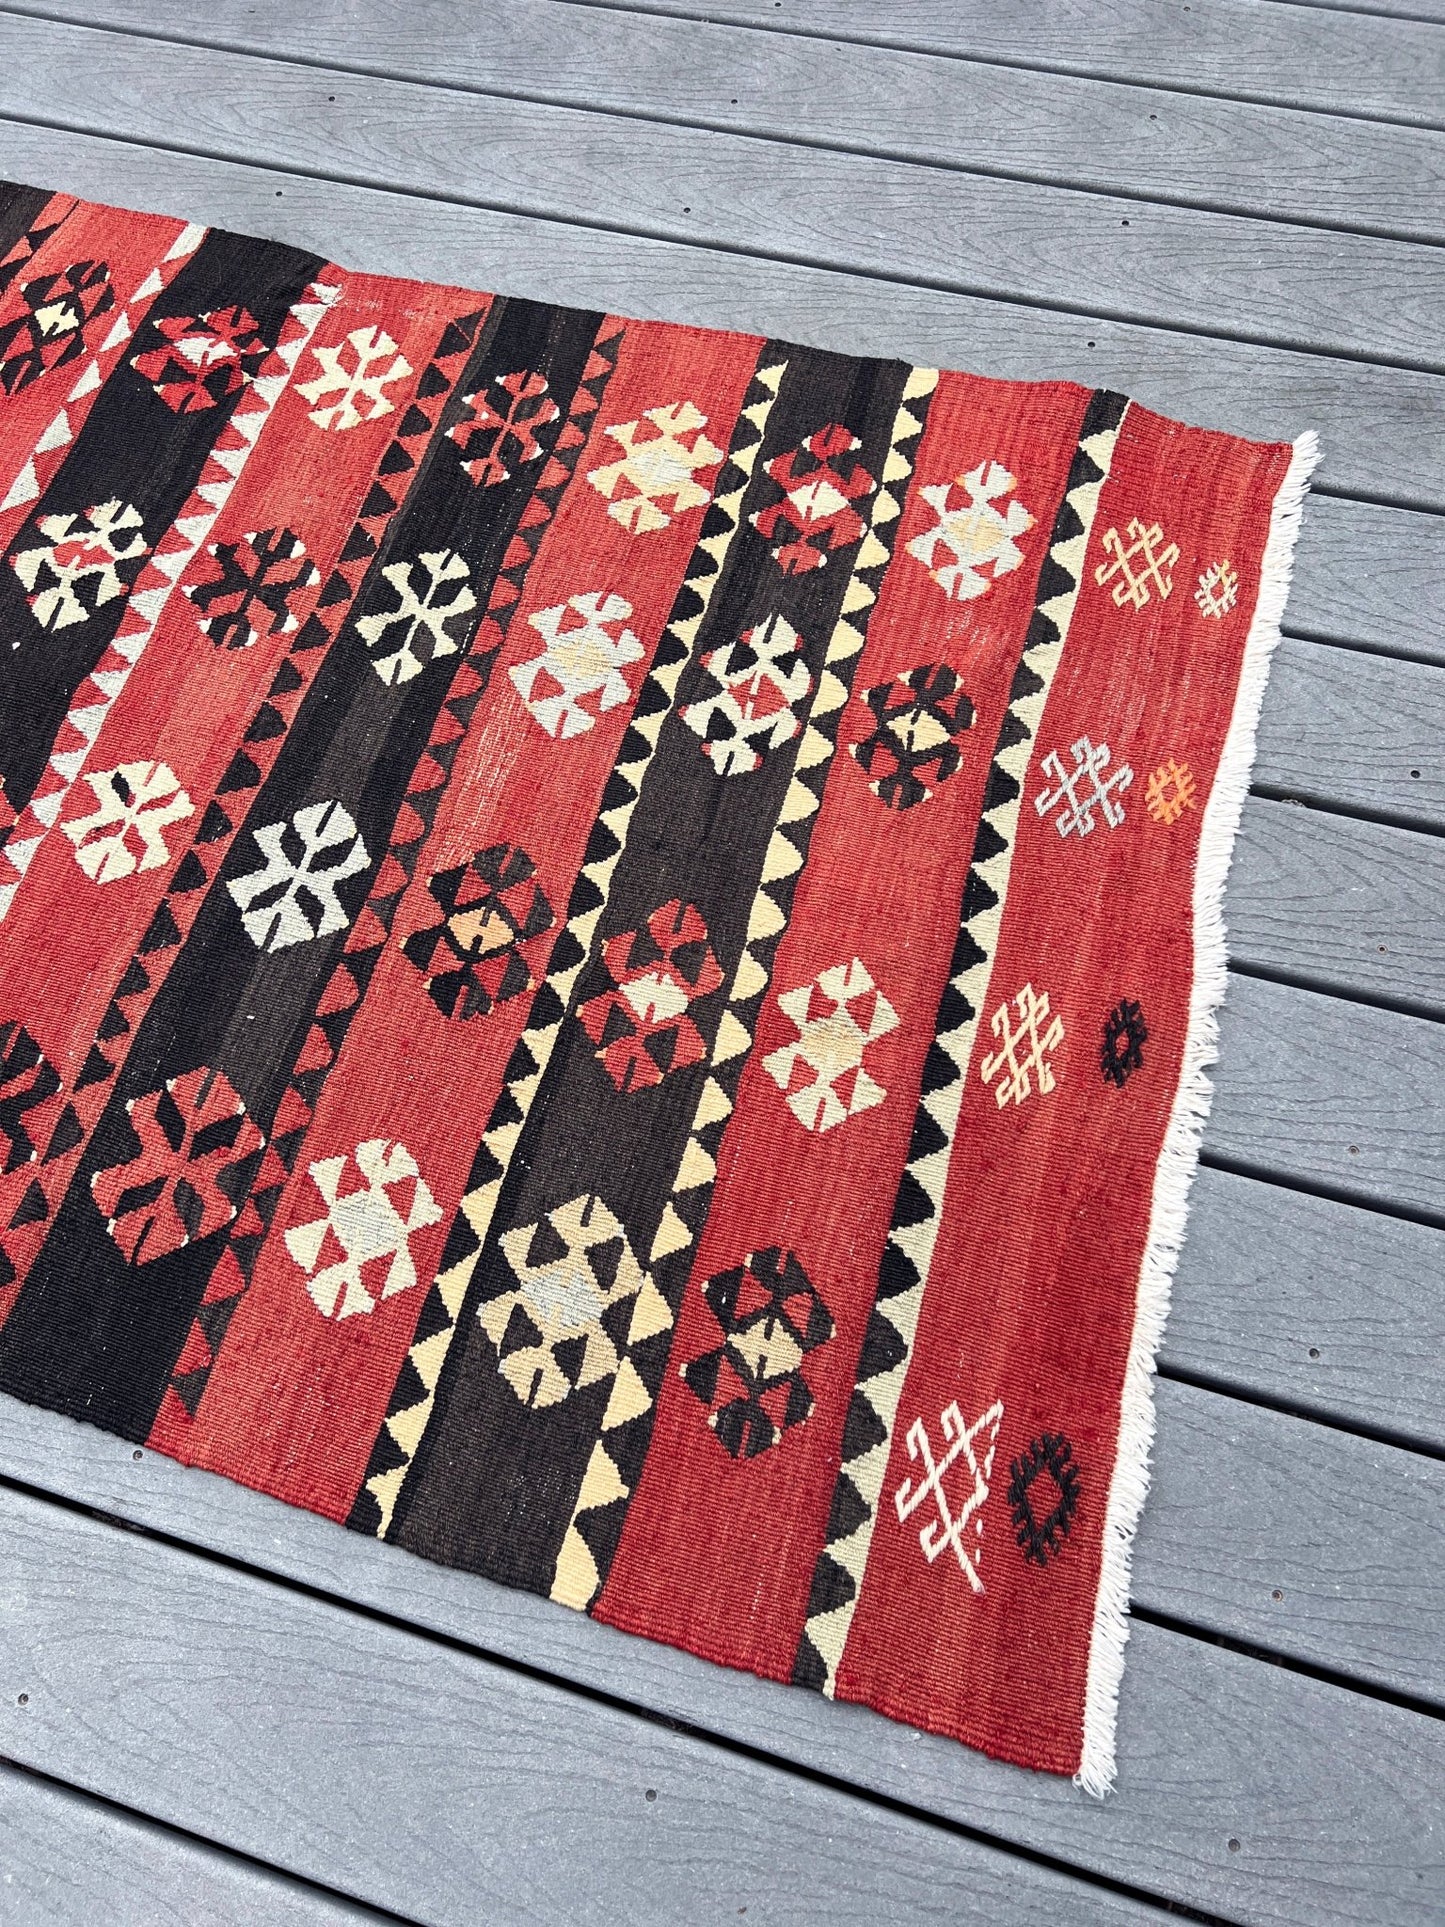 kayseri vintage turkish kilim runner rug shop palo alto, berkeley, san francisco bay area. Oriental rug store. Buy rug online